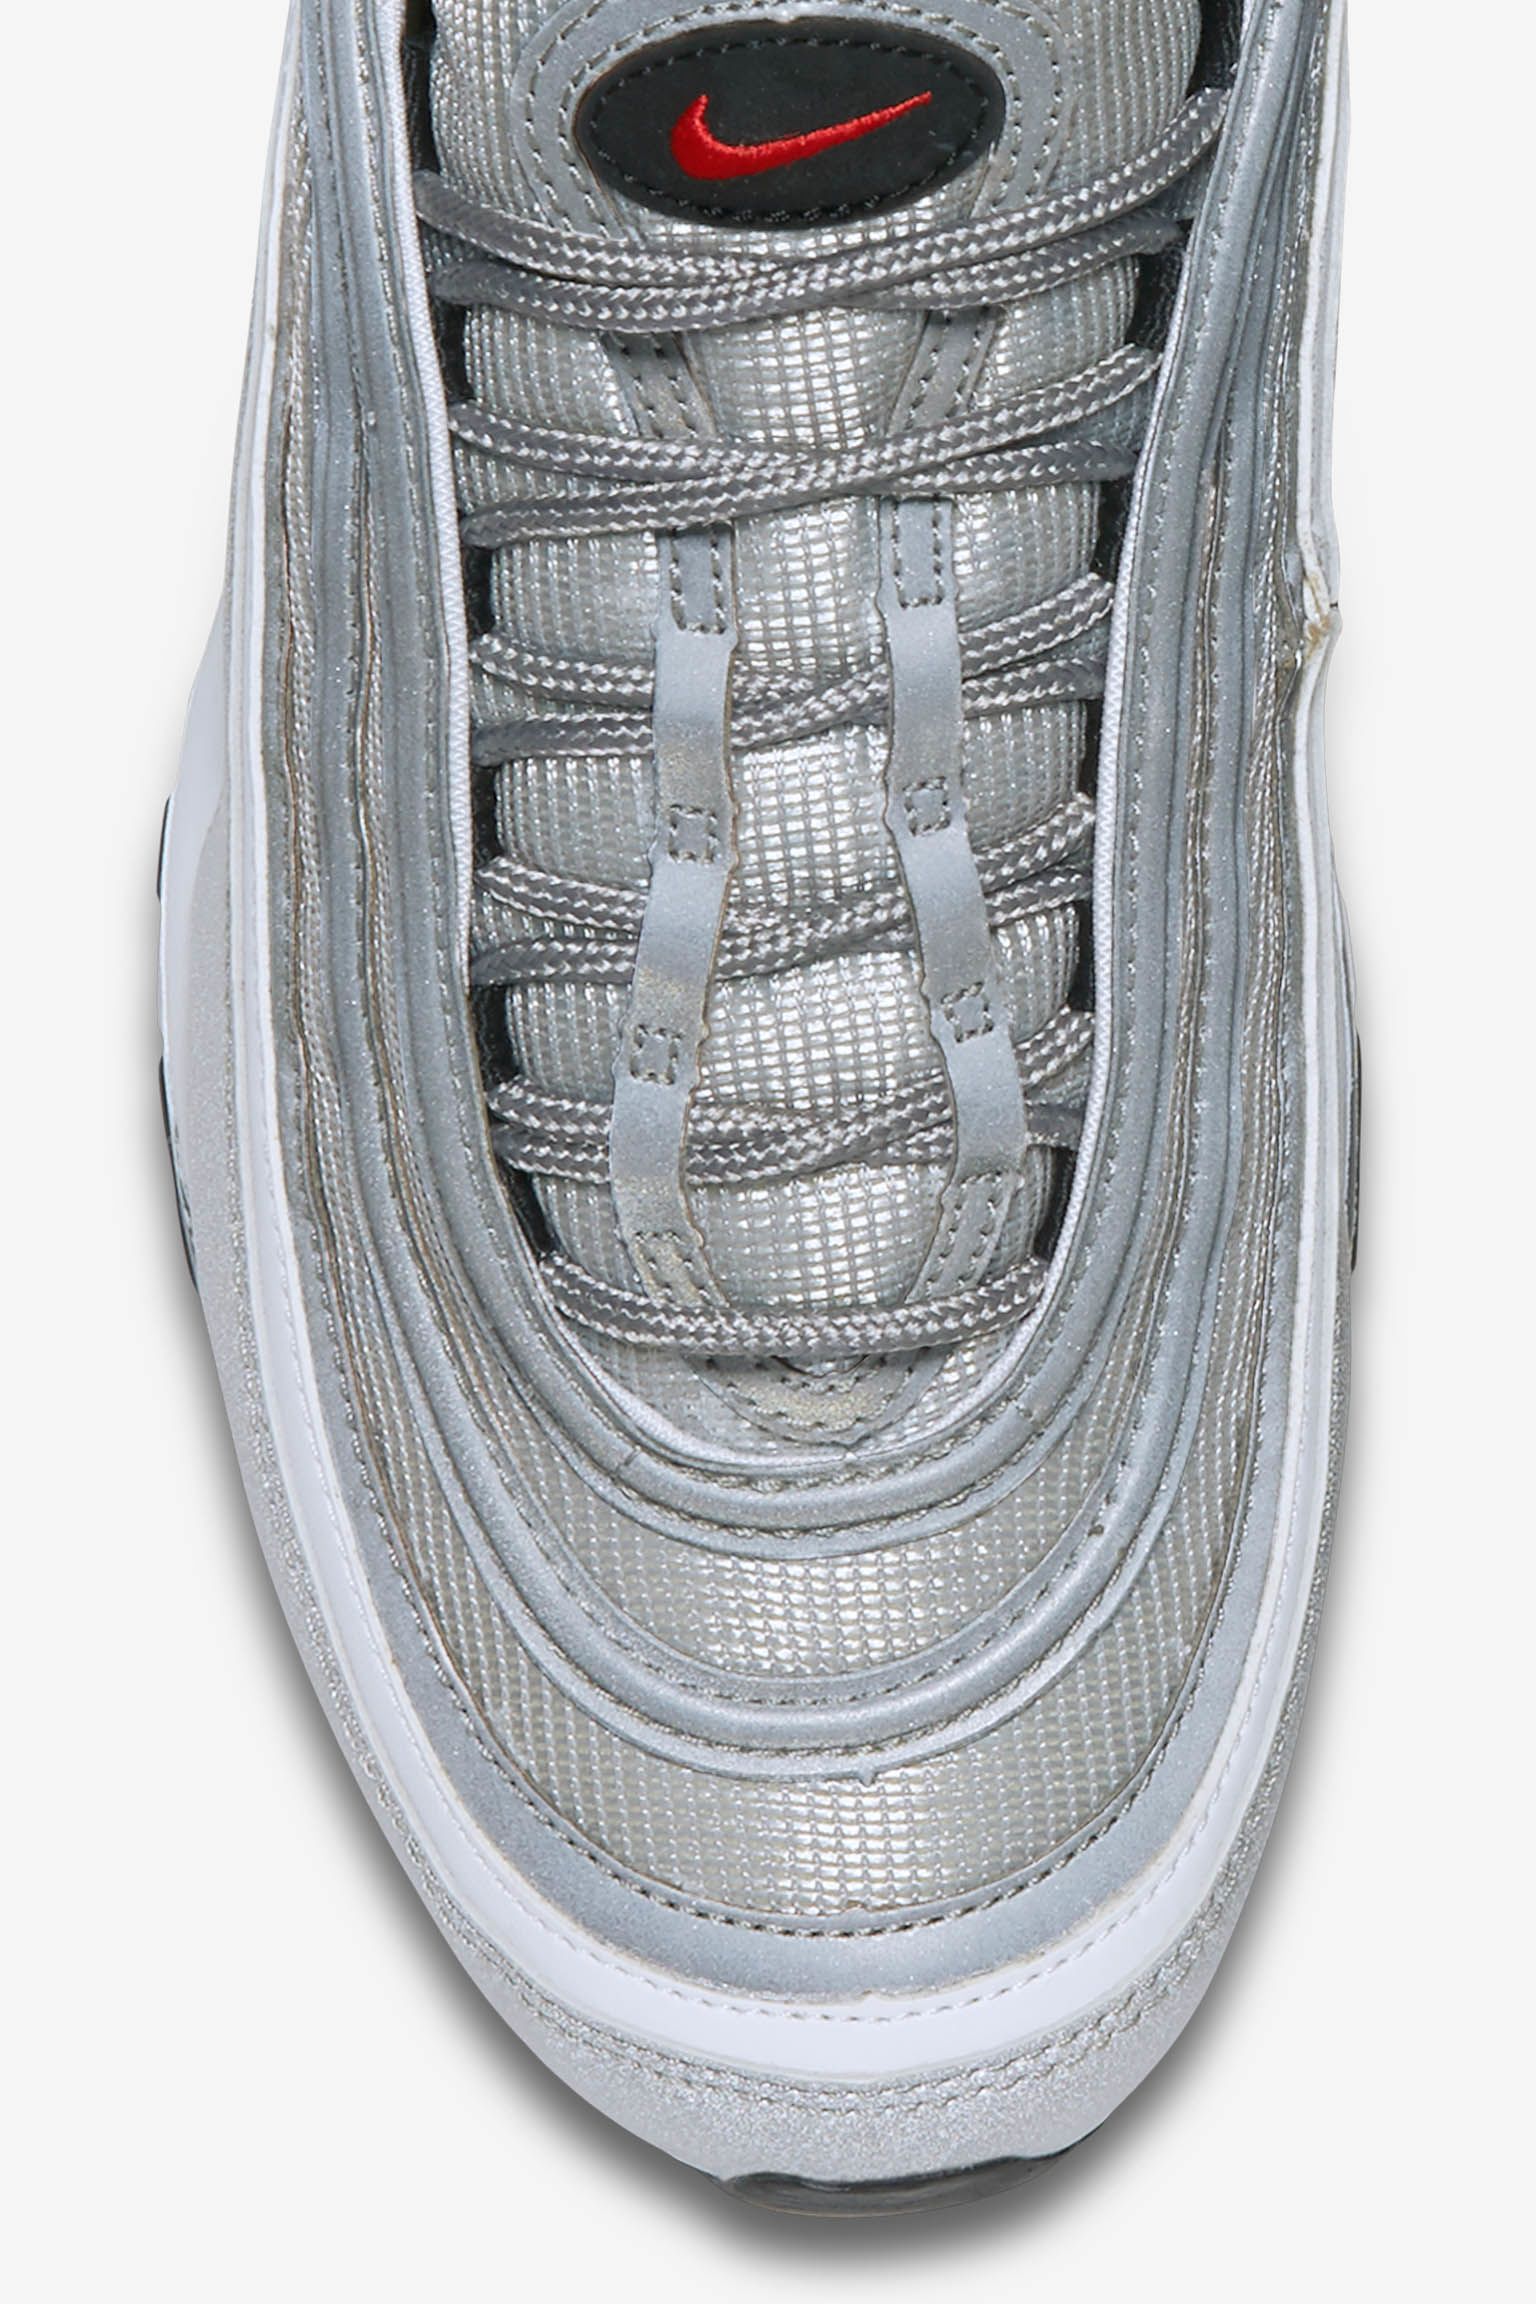 Nike Air 97 "Metallic Silver". Nike SNKRS